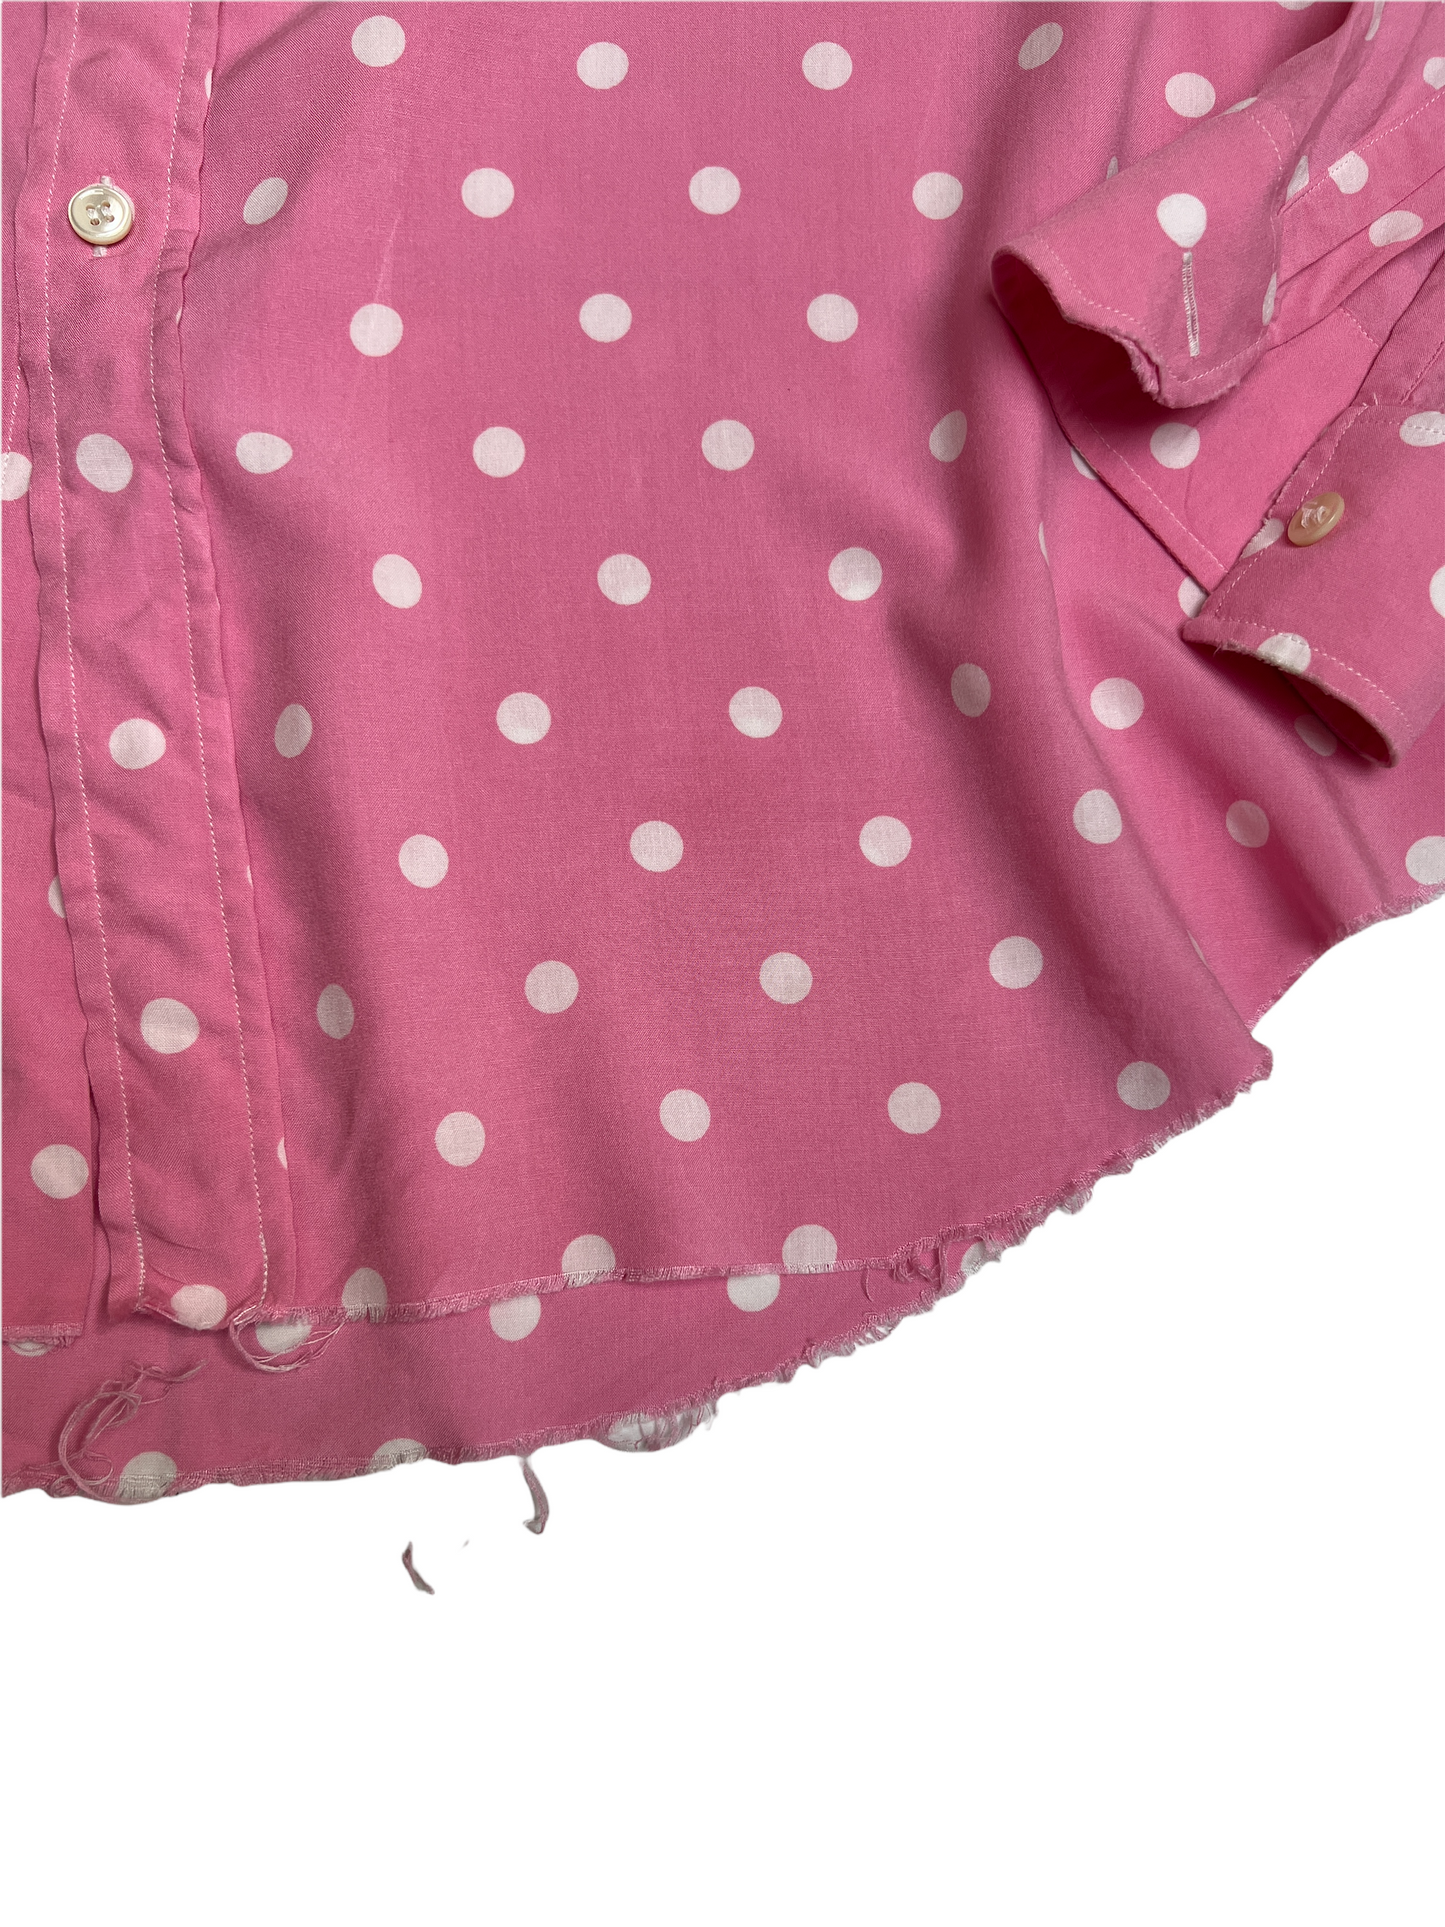 Pink Polka Dot Shirt - L